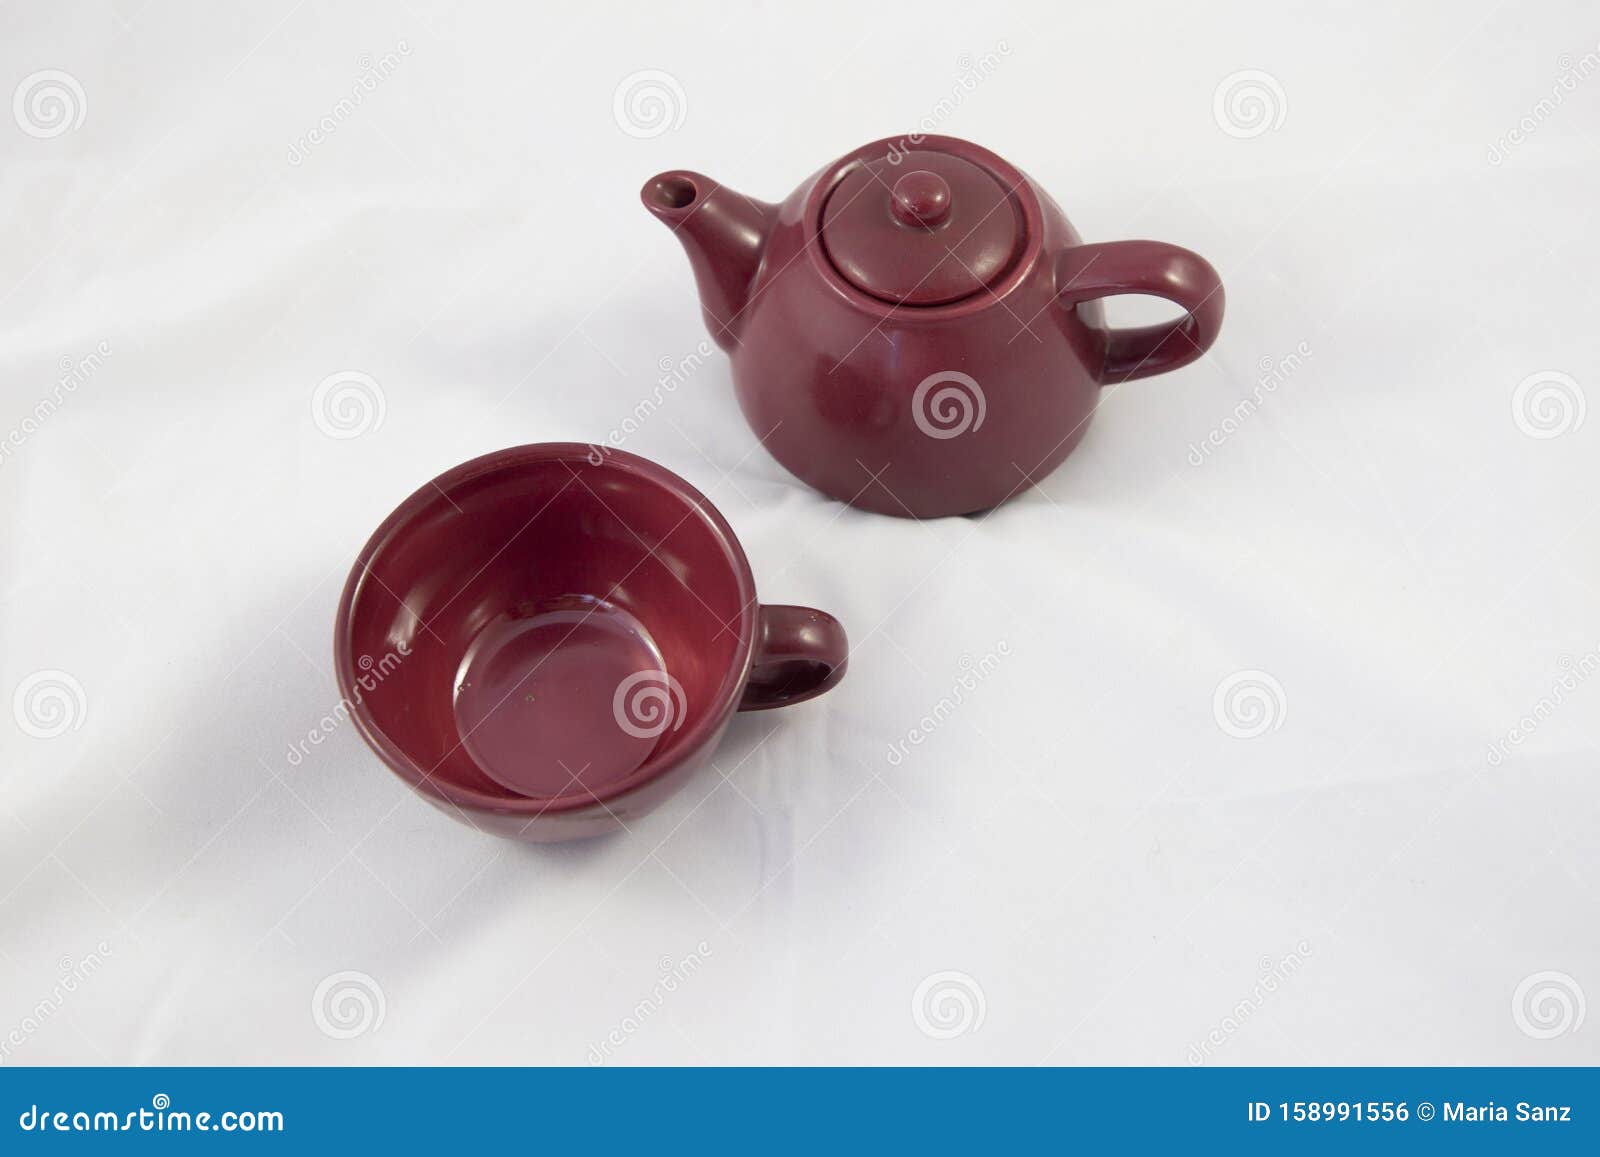 maroon ceramic teapot on white background